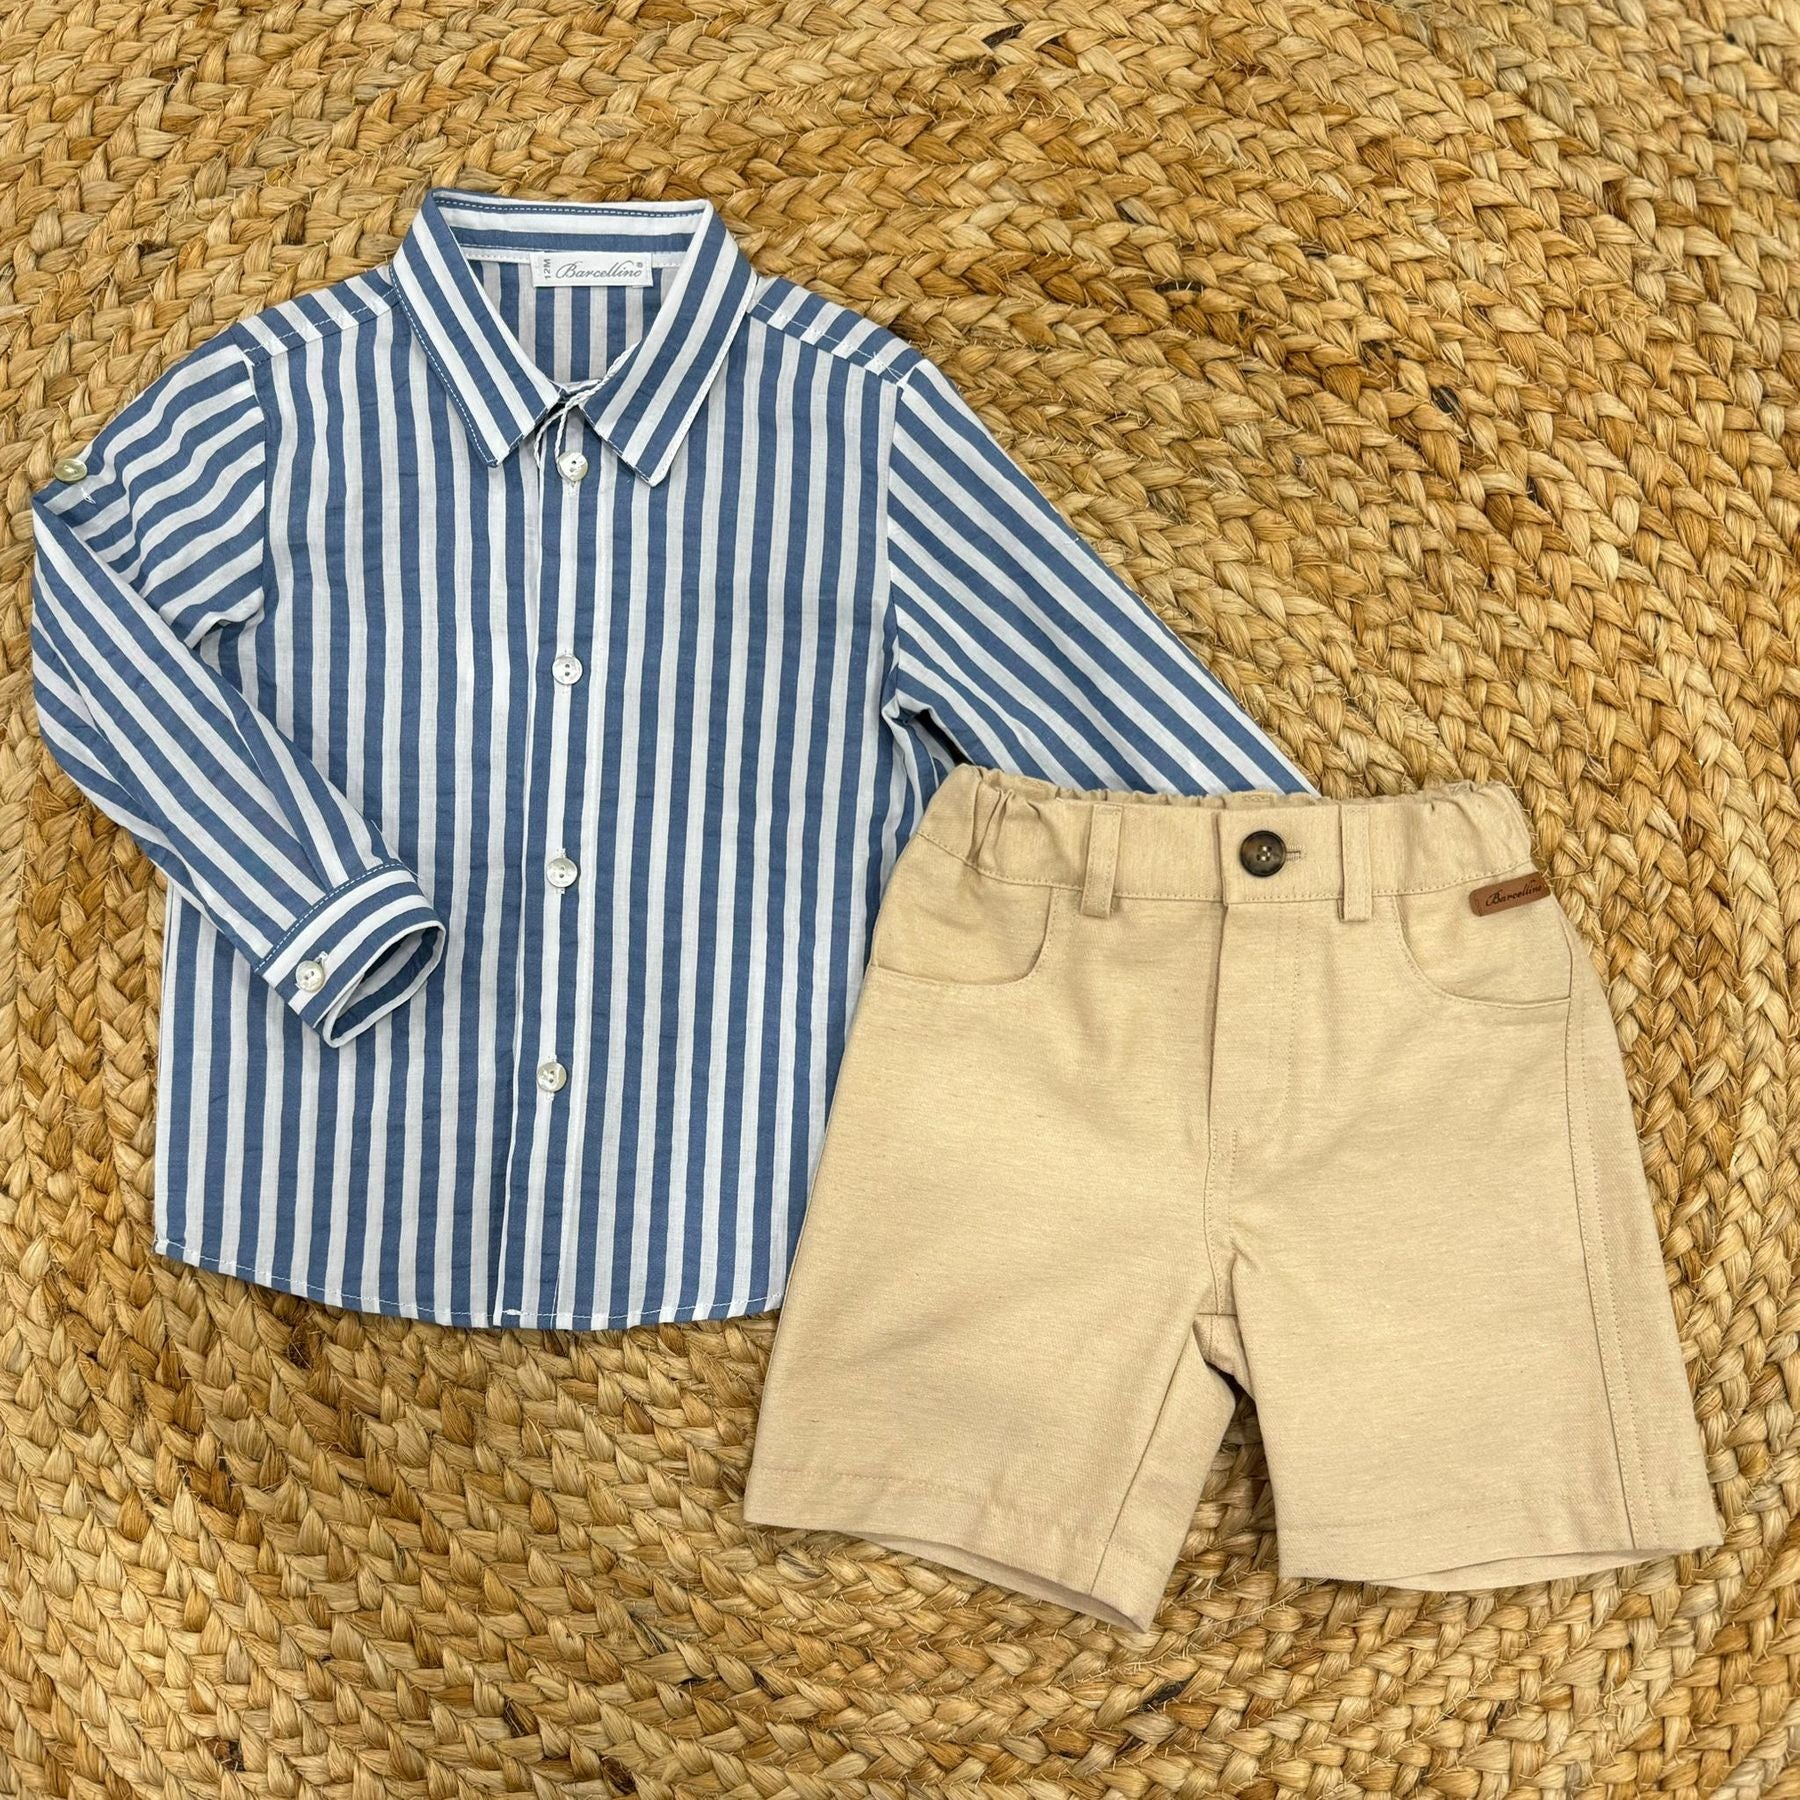 Barcellino Striped shirt and Bermuda shorts